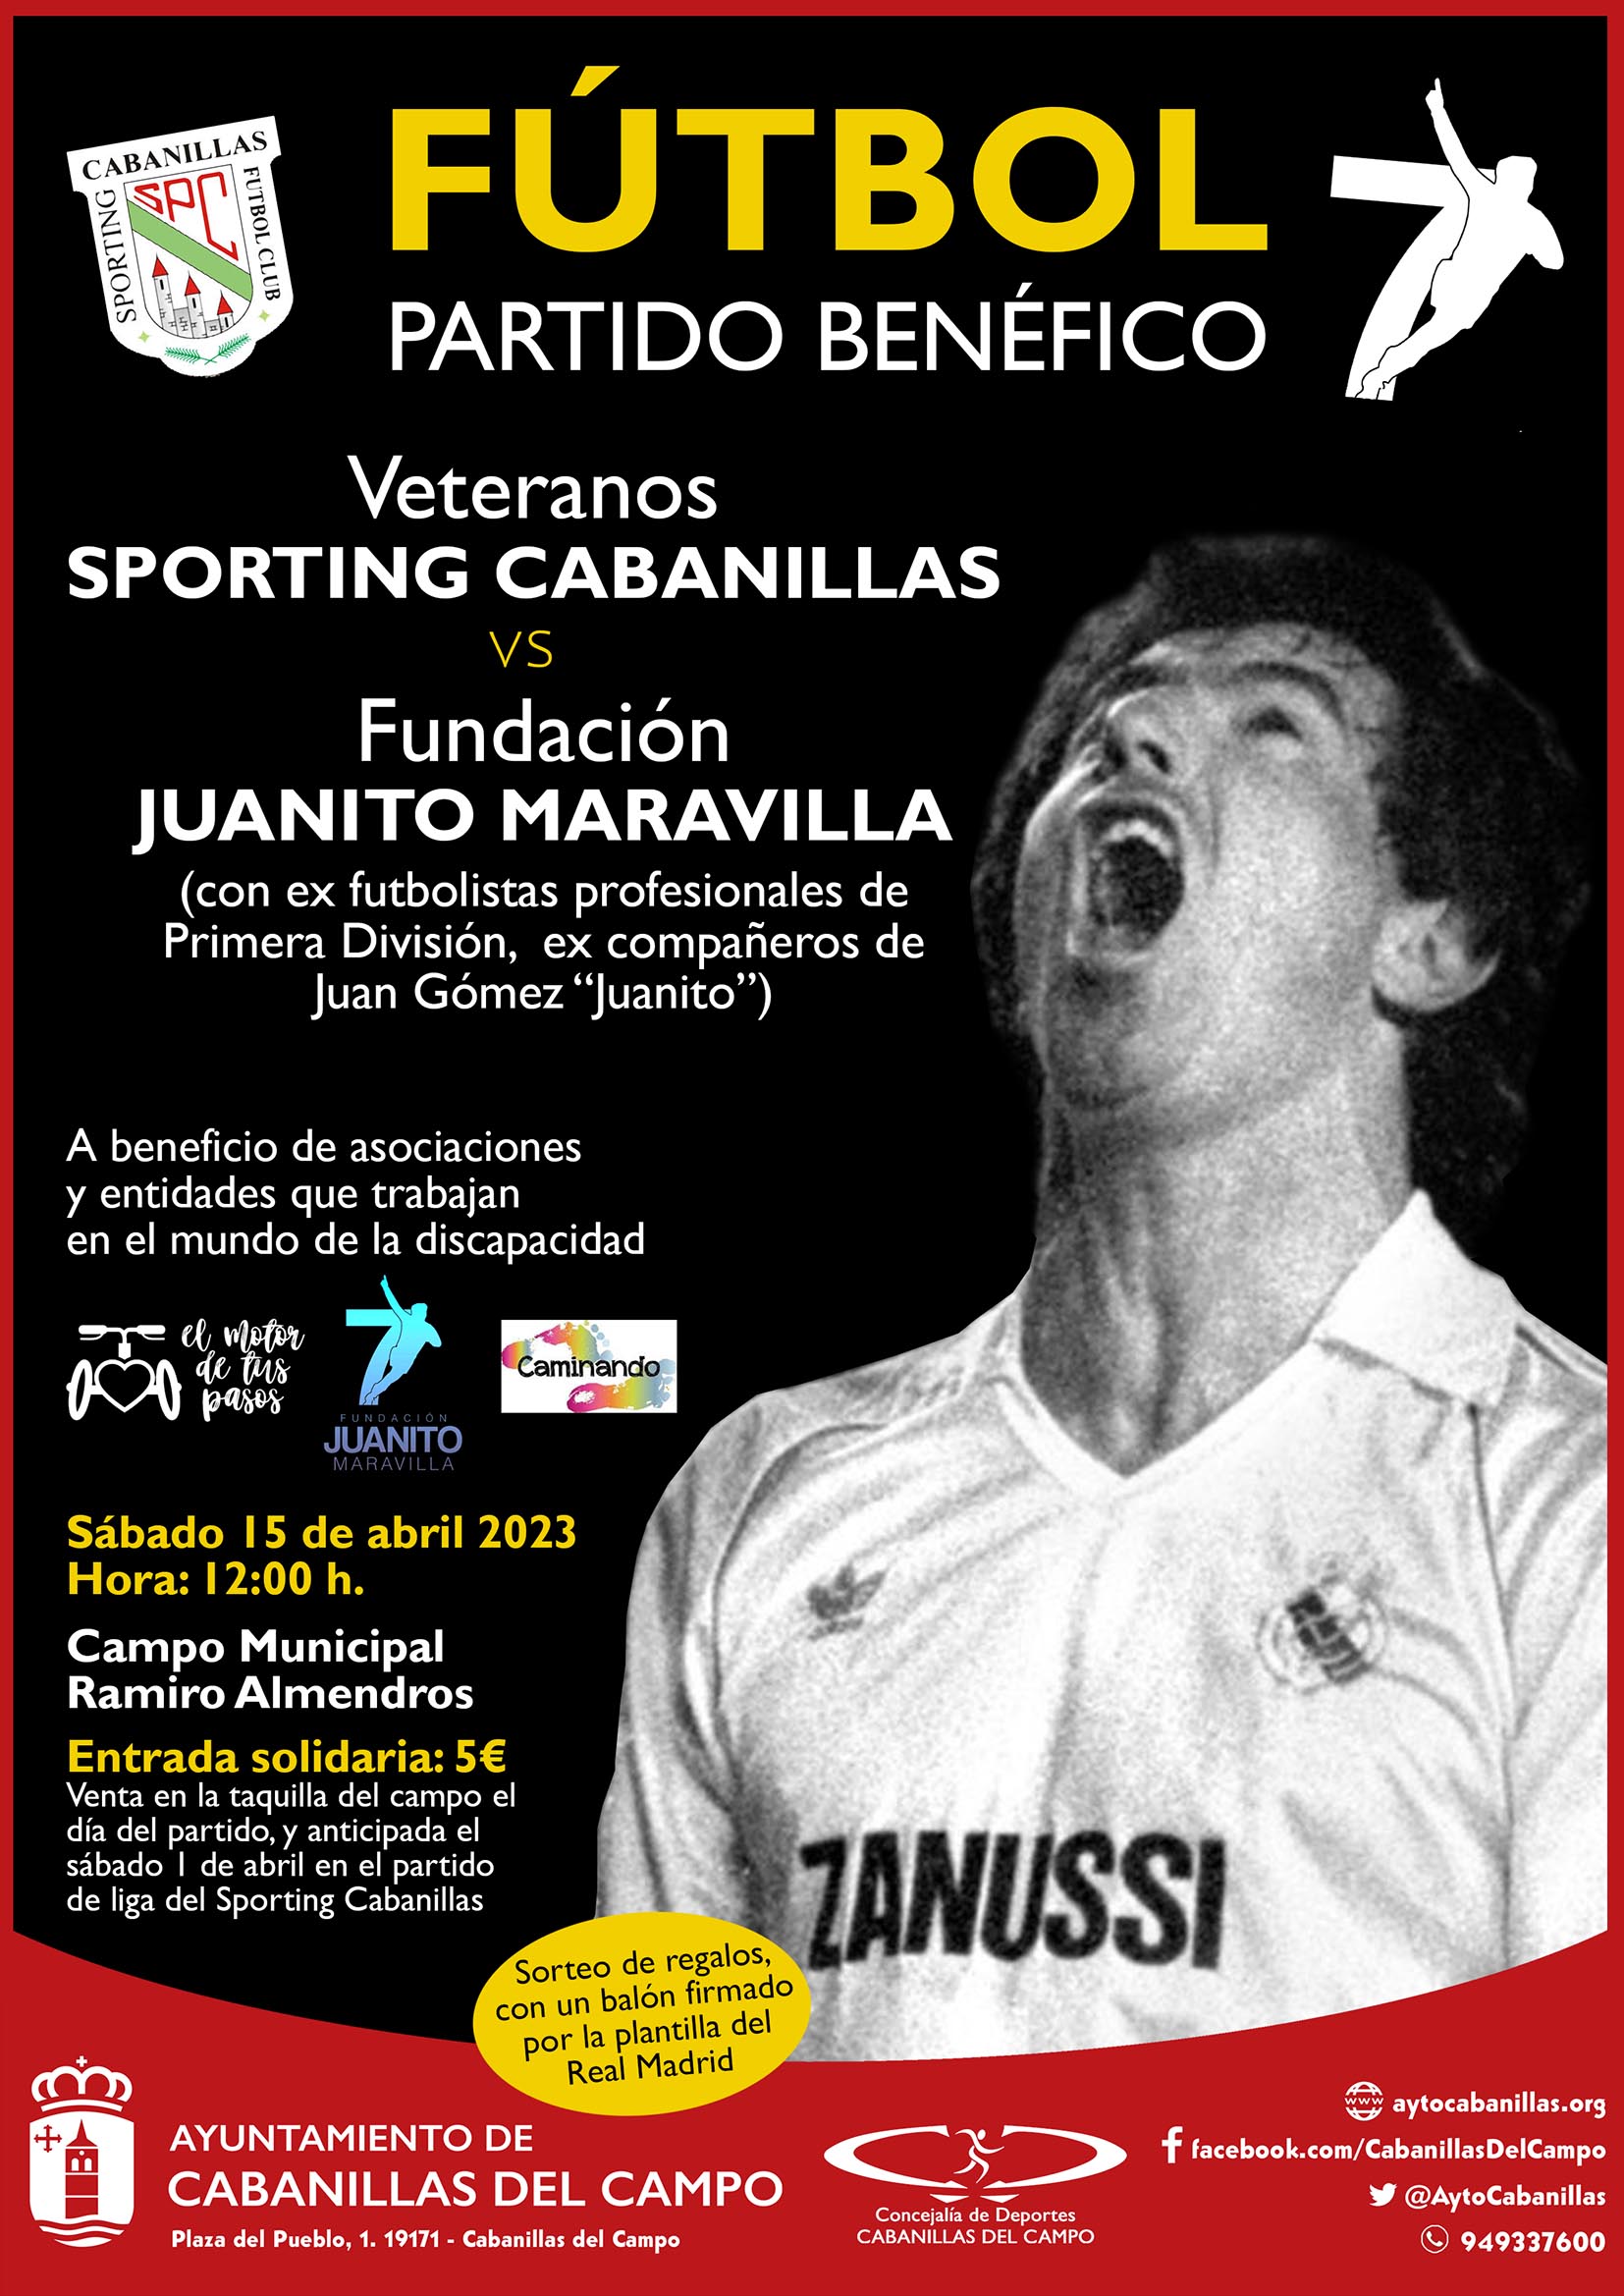 Partido de fútbol benéfico de veteranos: Sporting Cabanillas vs Fundación Juanito Maravilla